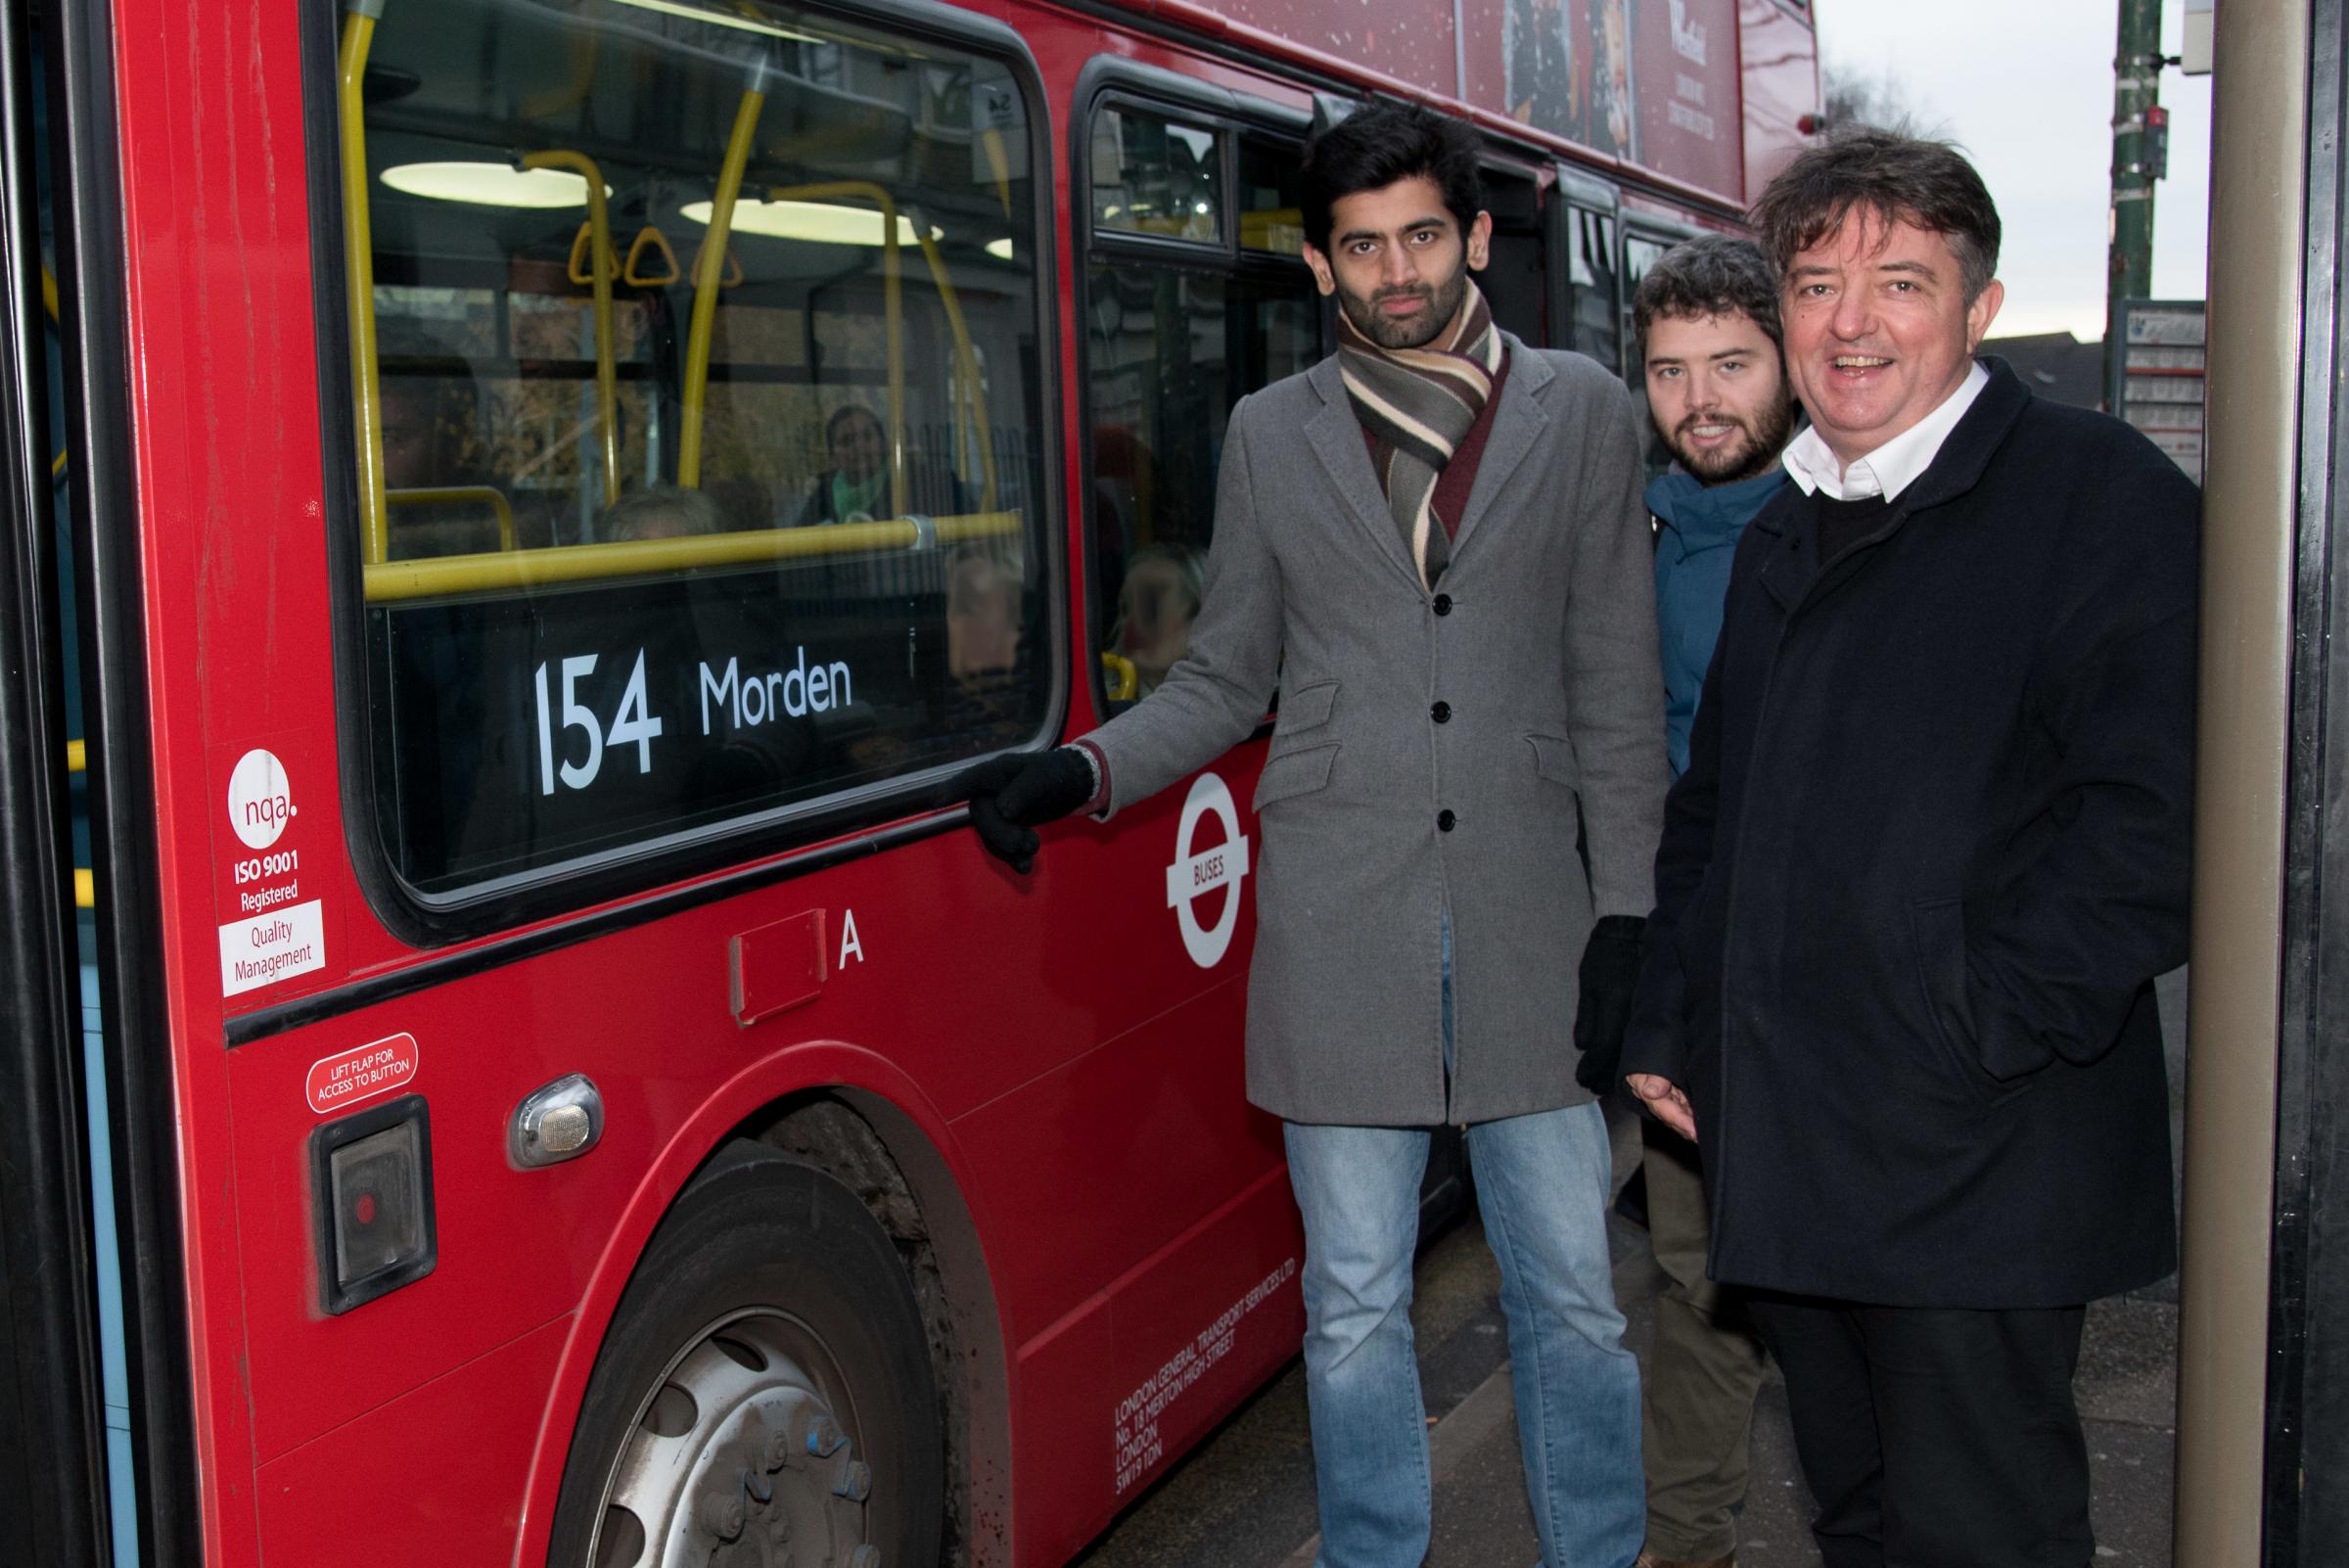 Campaign launched against changes to 'vital' Croydon bus route